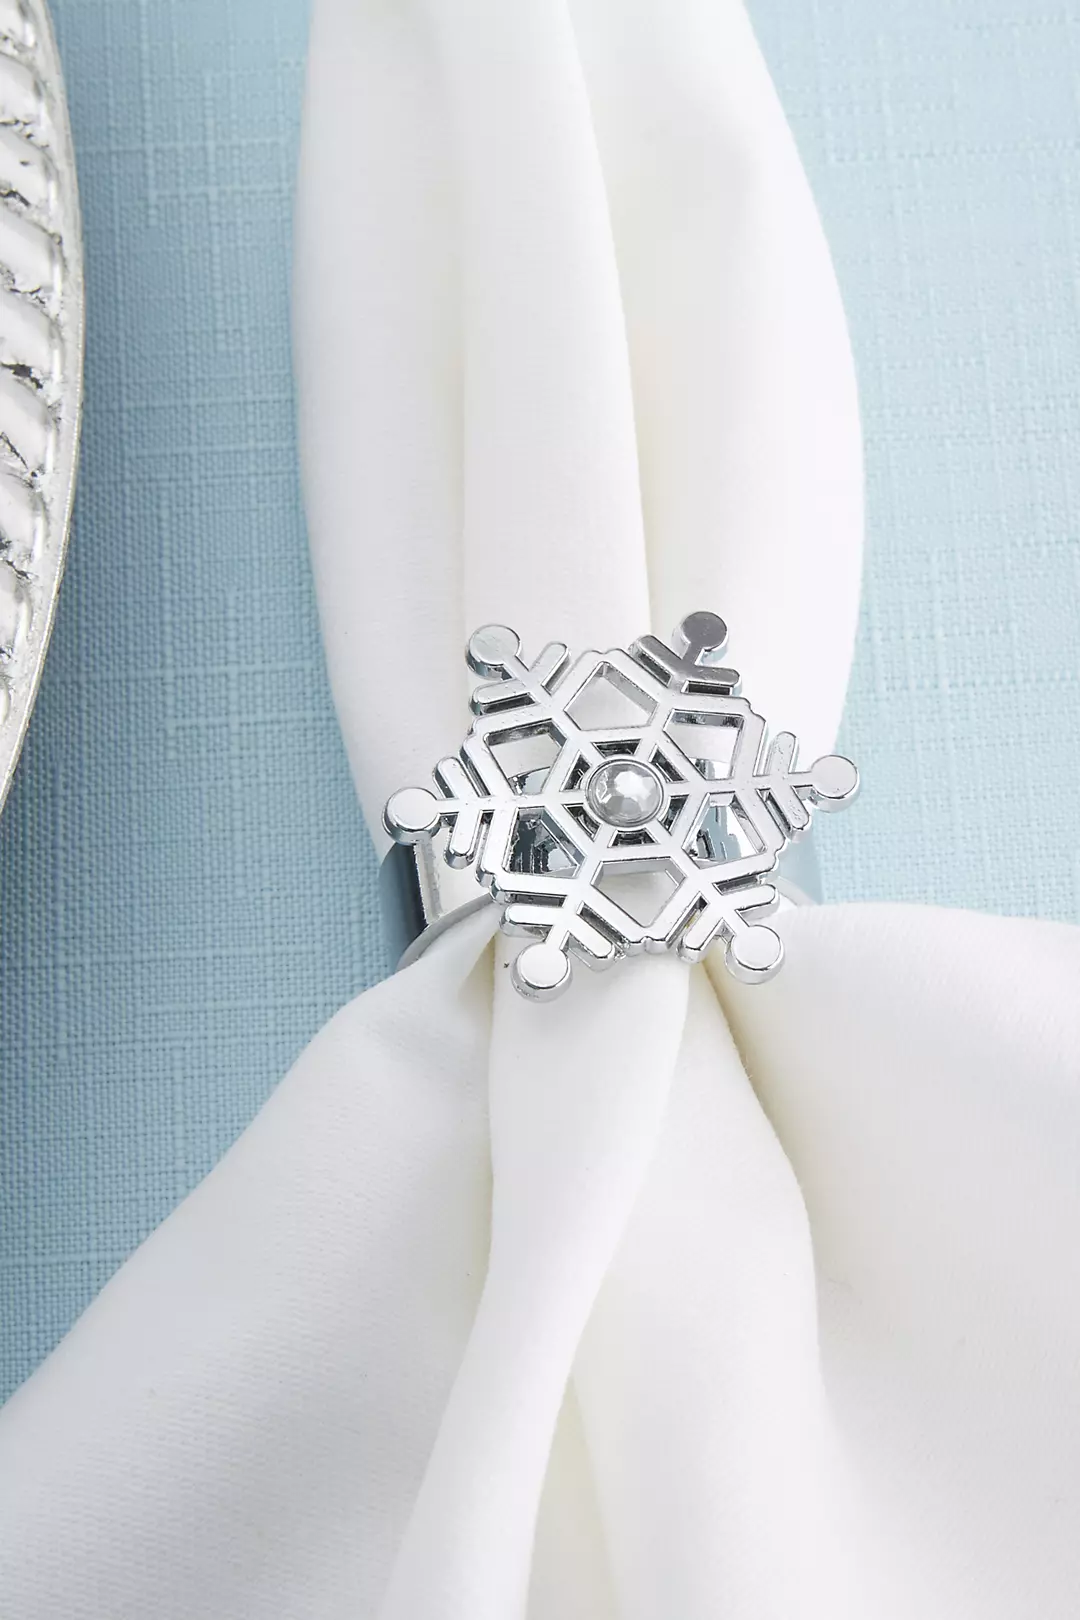 Rhinestone Snowflake Napkin Rings Image